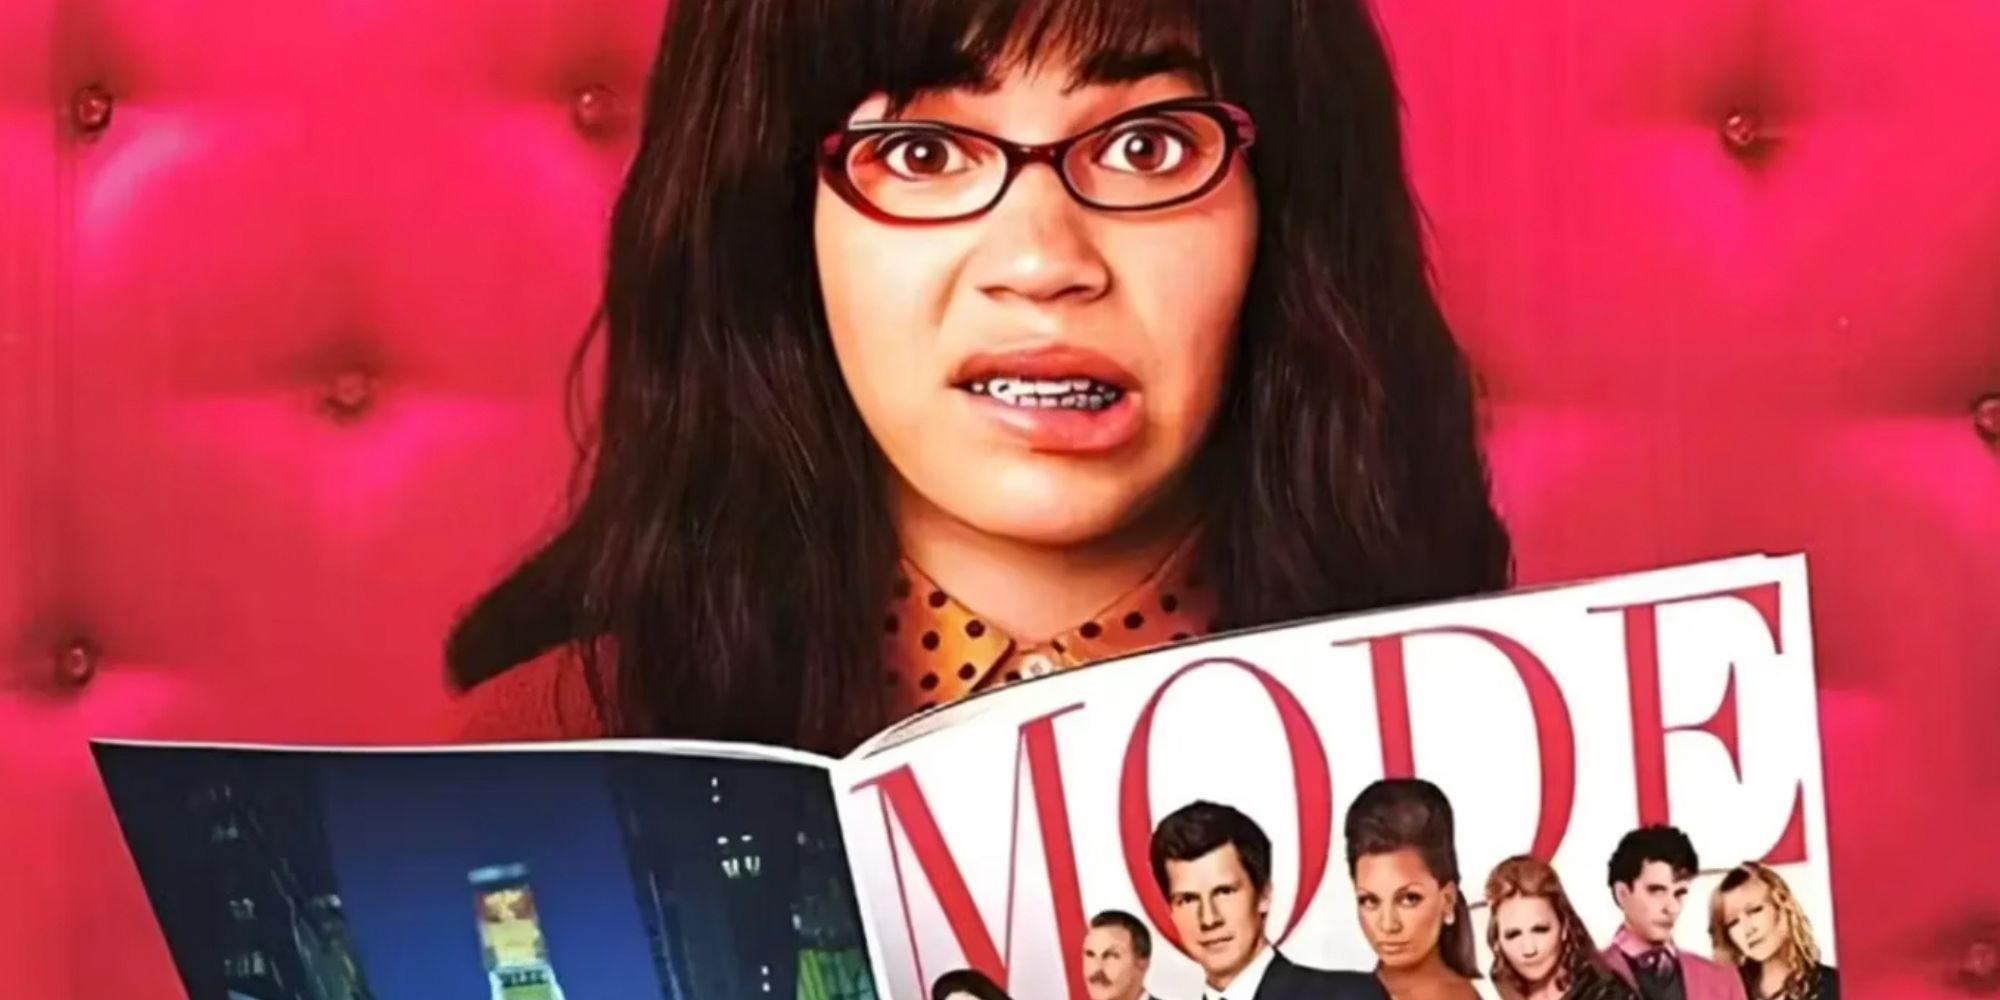 America Ferrera as Betty Suarez reading Mode Magazine for Ugly Betty